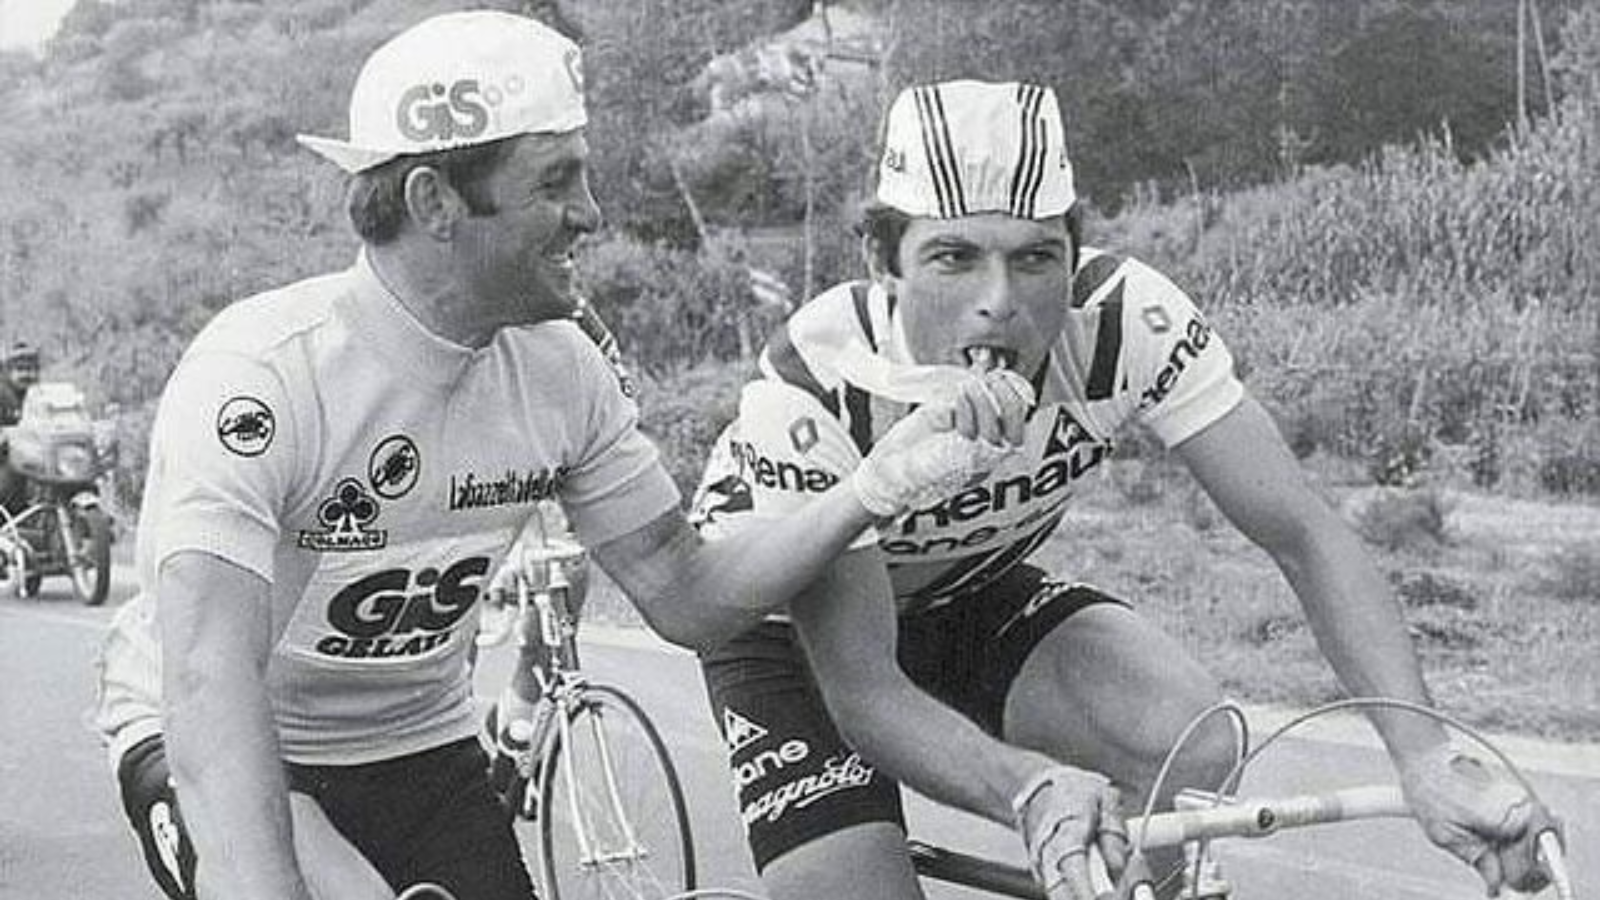 Bernard Hinault eats Wladimiro Panizza's food at Giro d'Italia 1980